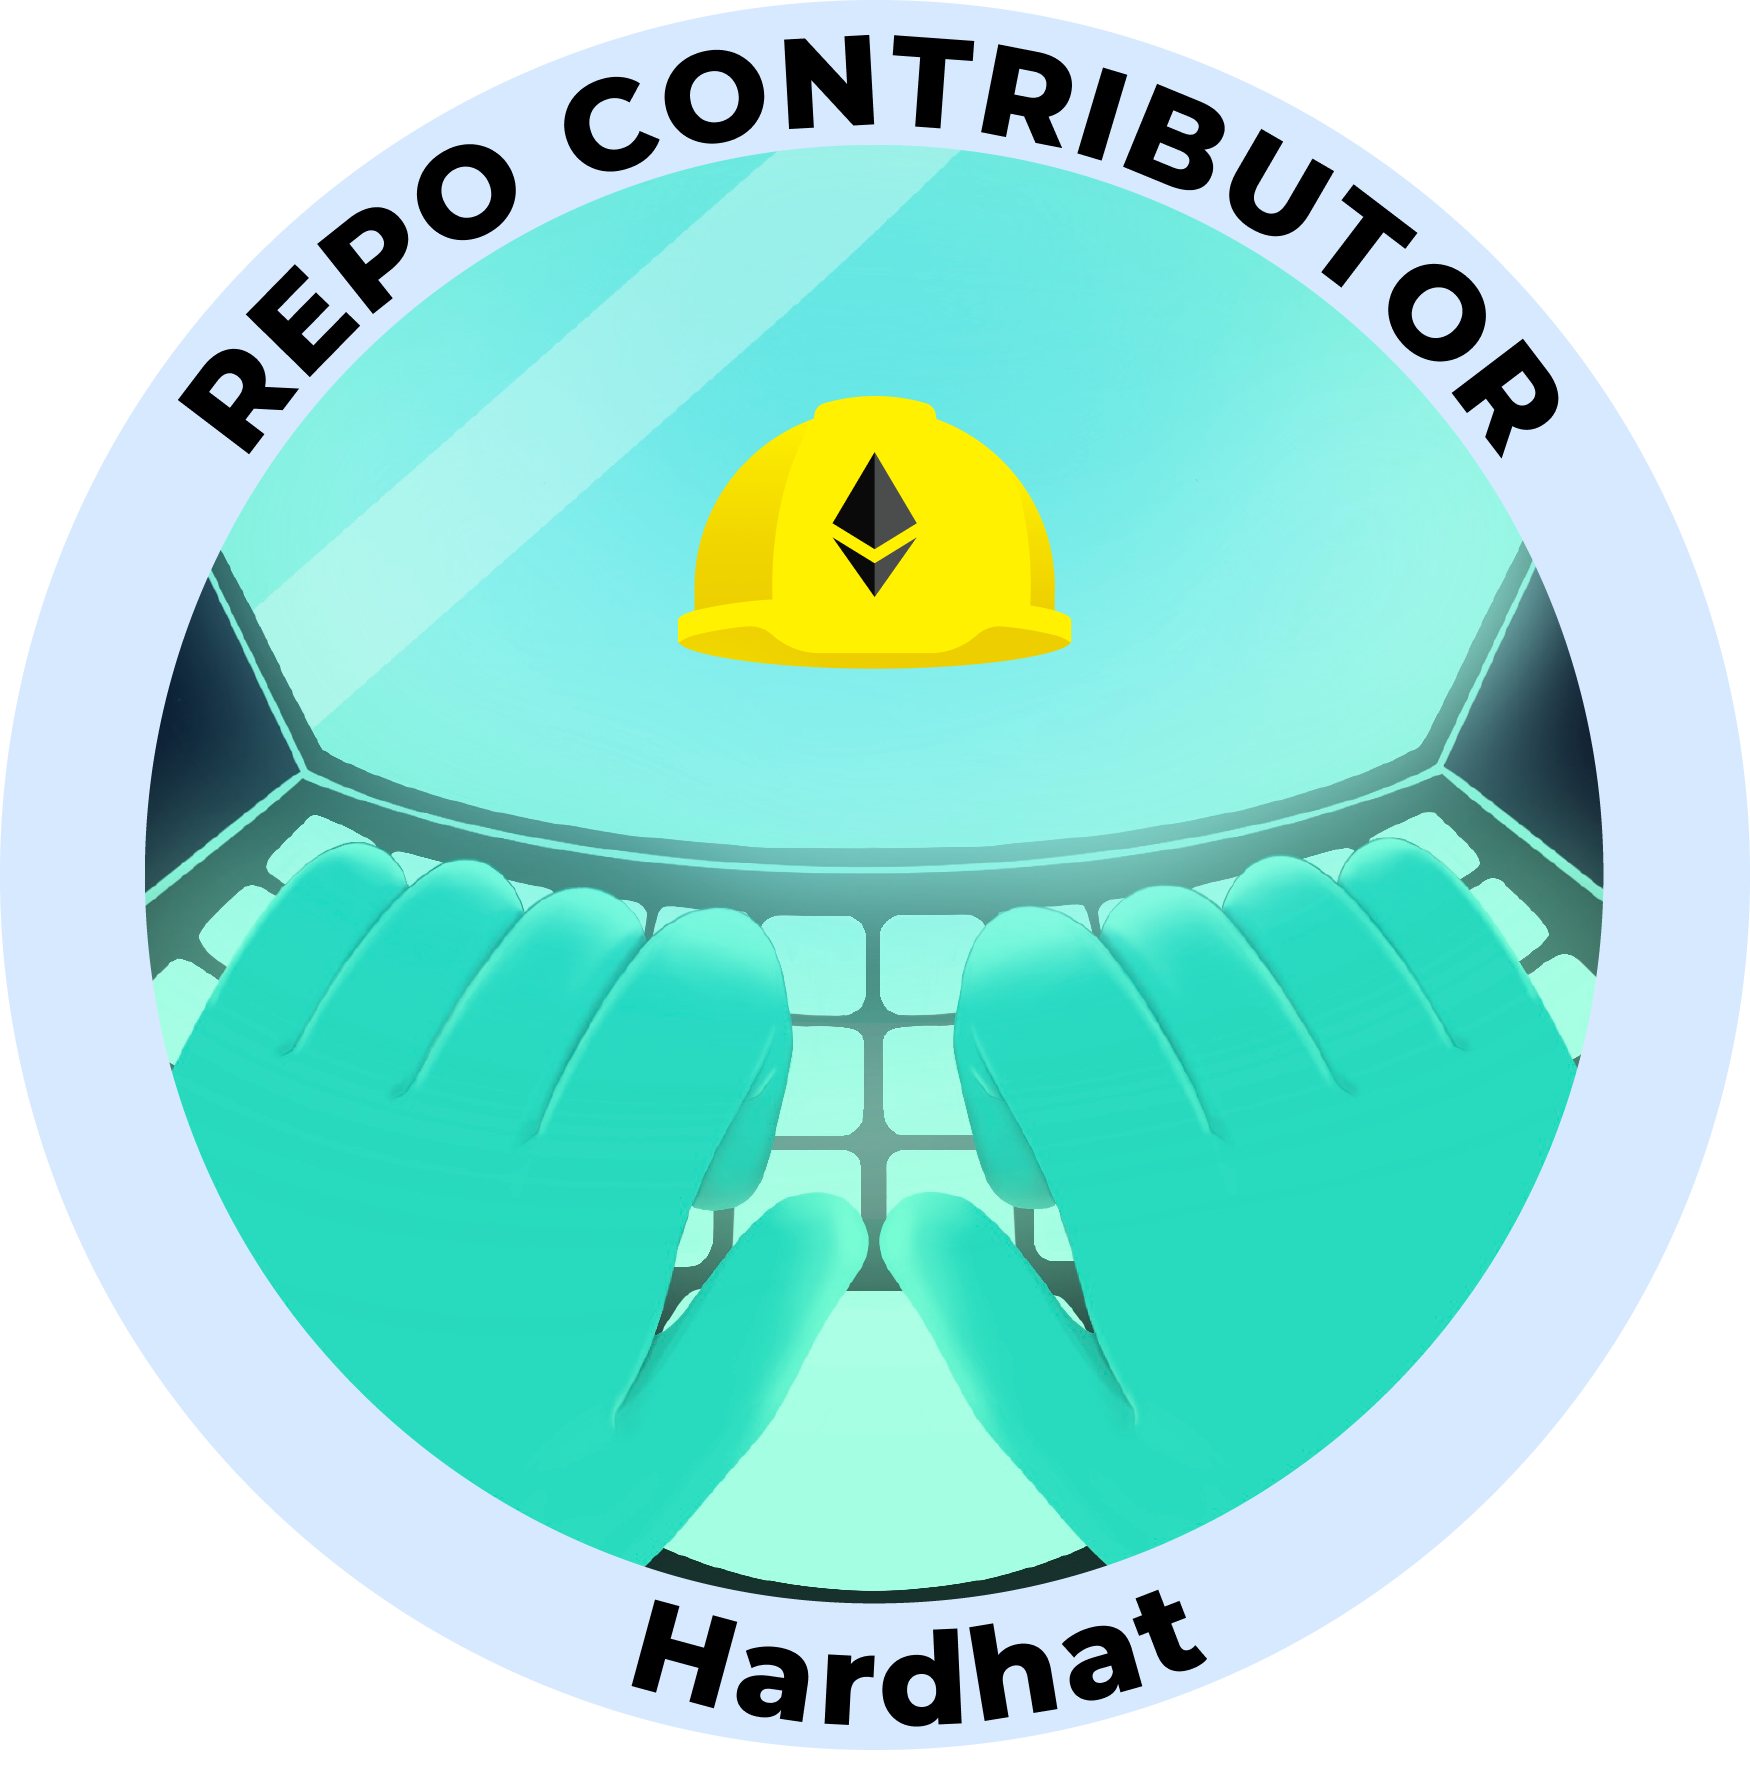 Web3 Badge | Project Contributor: Hardhat logo